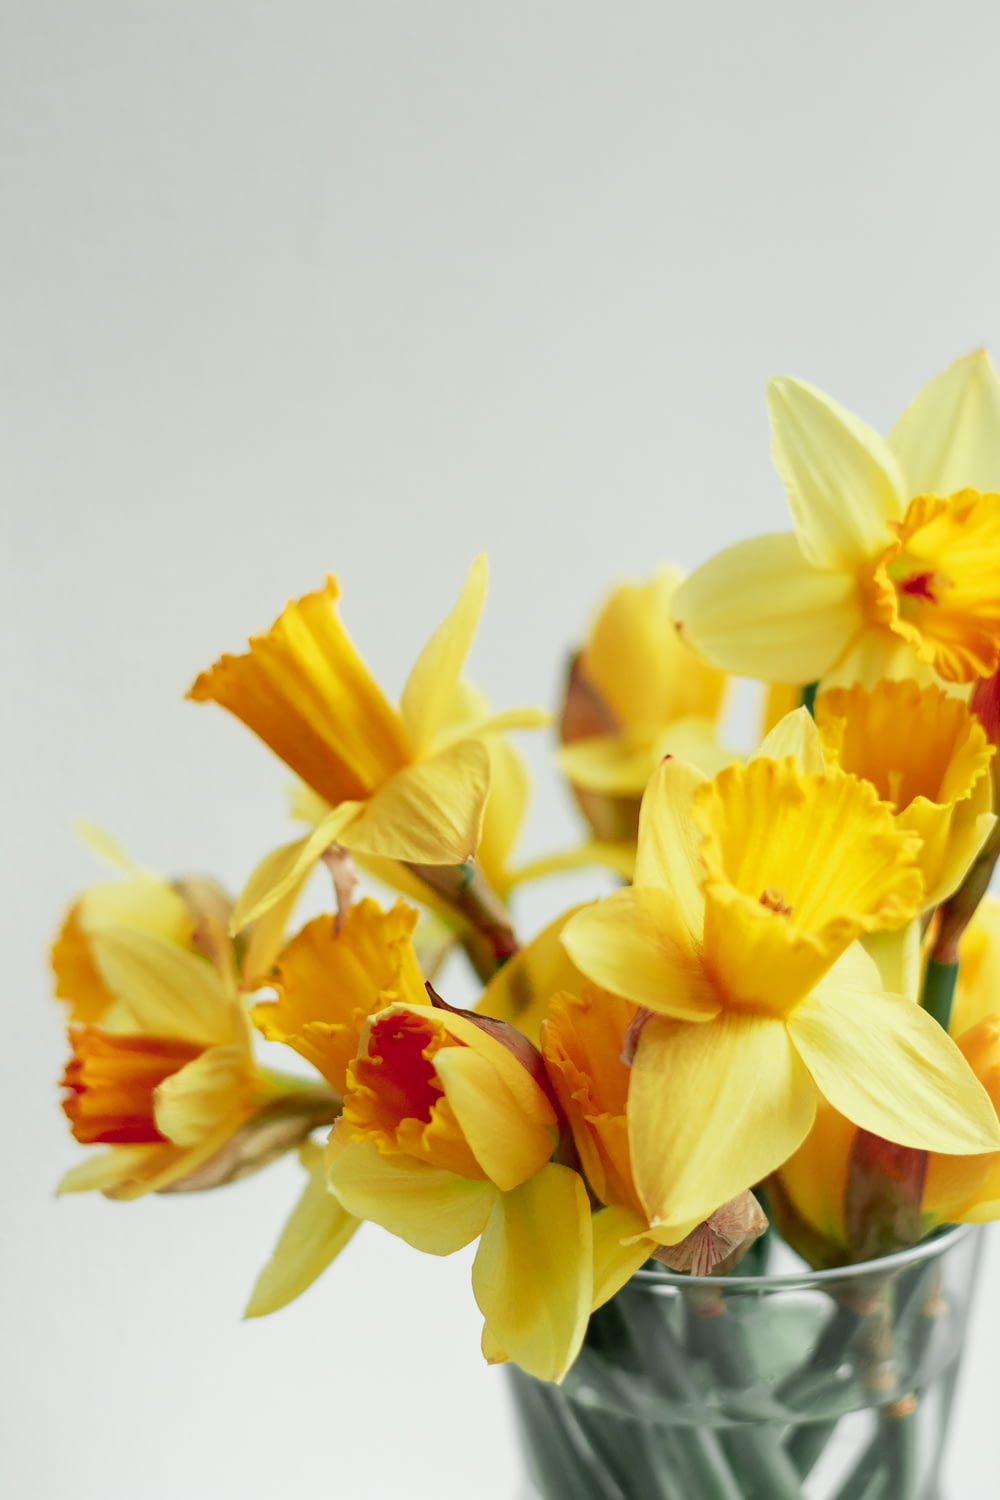 Jonquilles jaunes en fleurs photo en gros plan